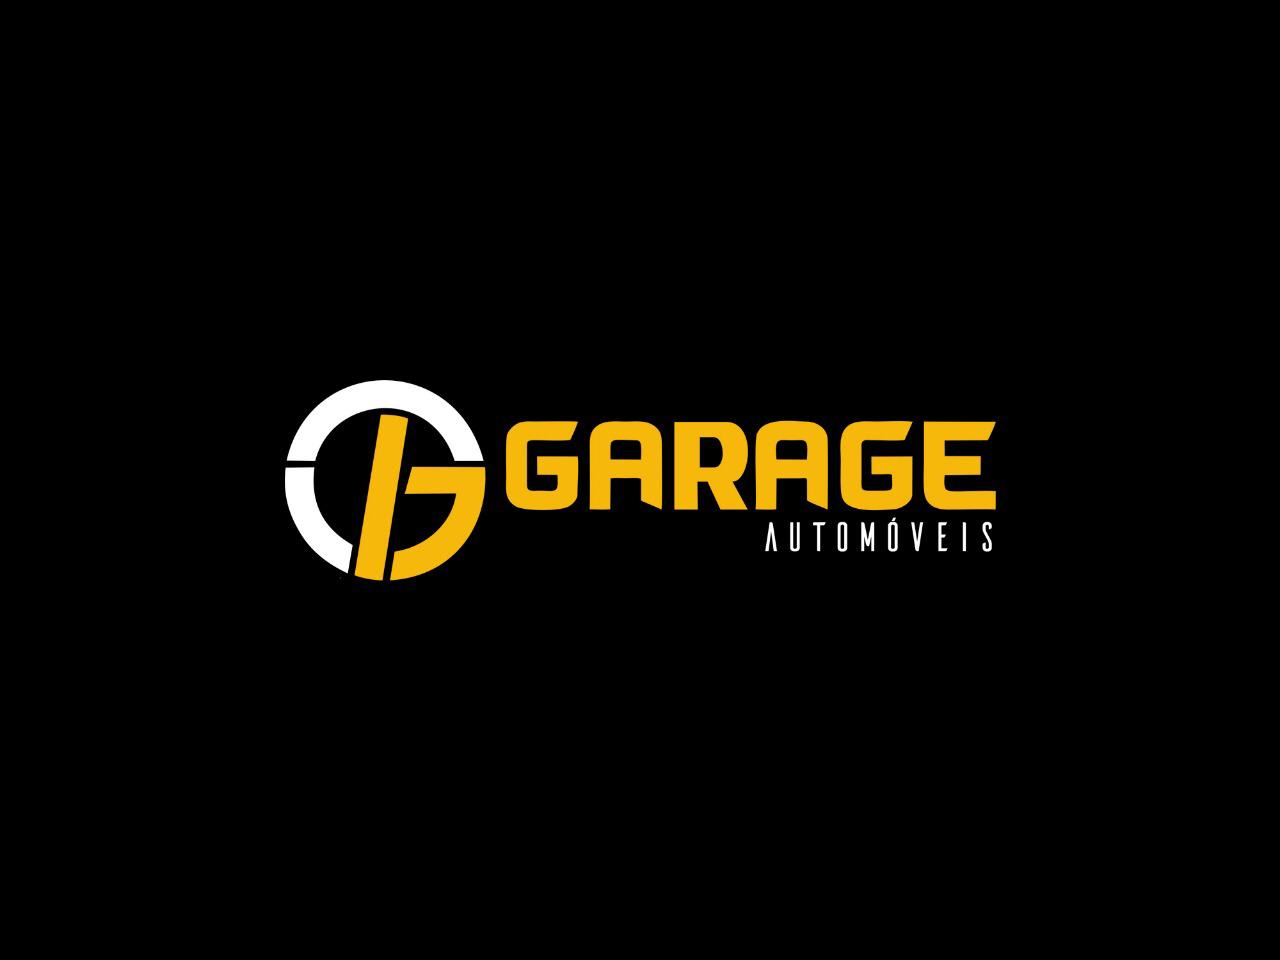 Garage Automóveis